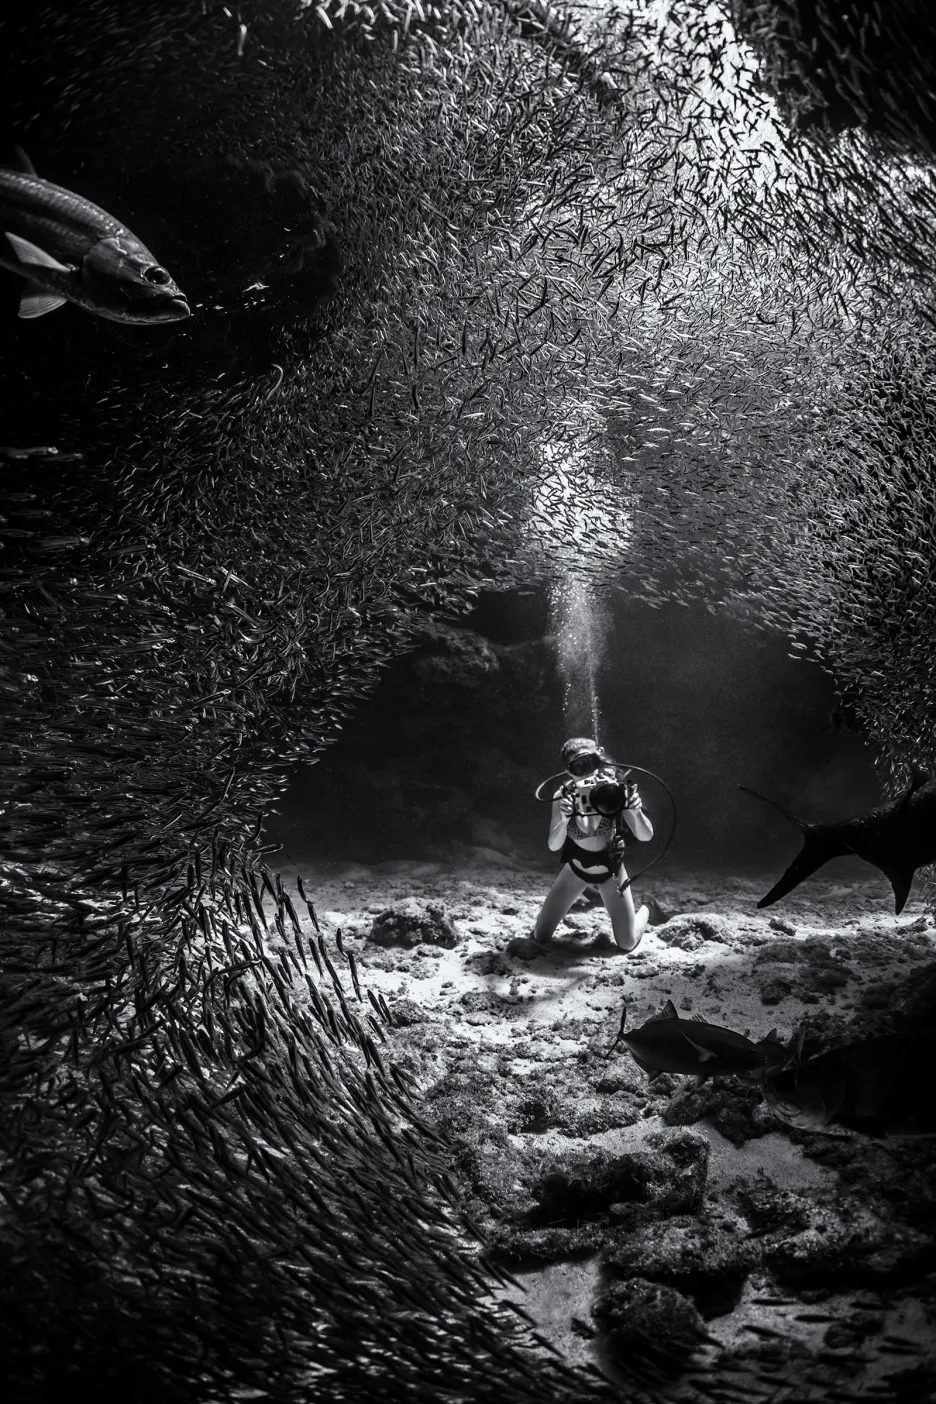 Underwater Photographer of the Year 2019